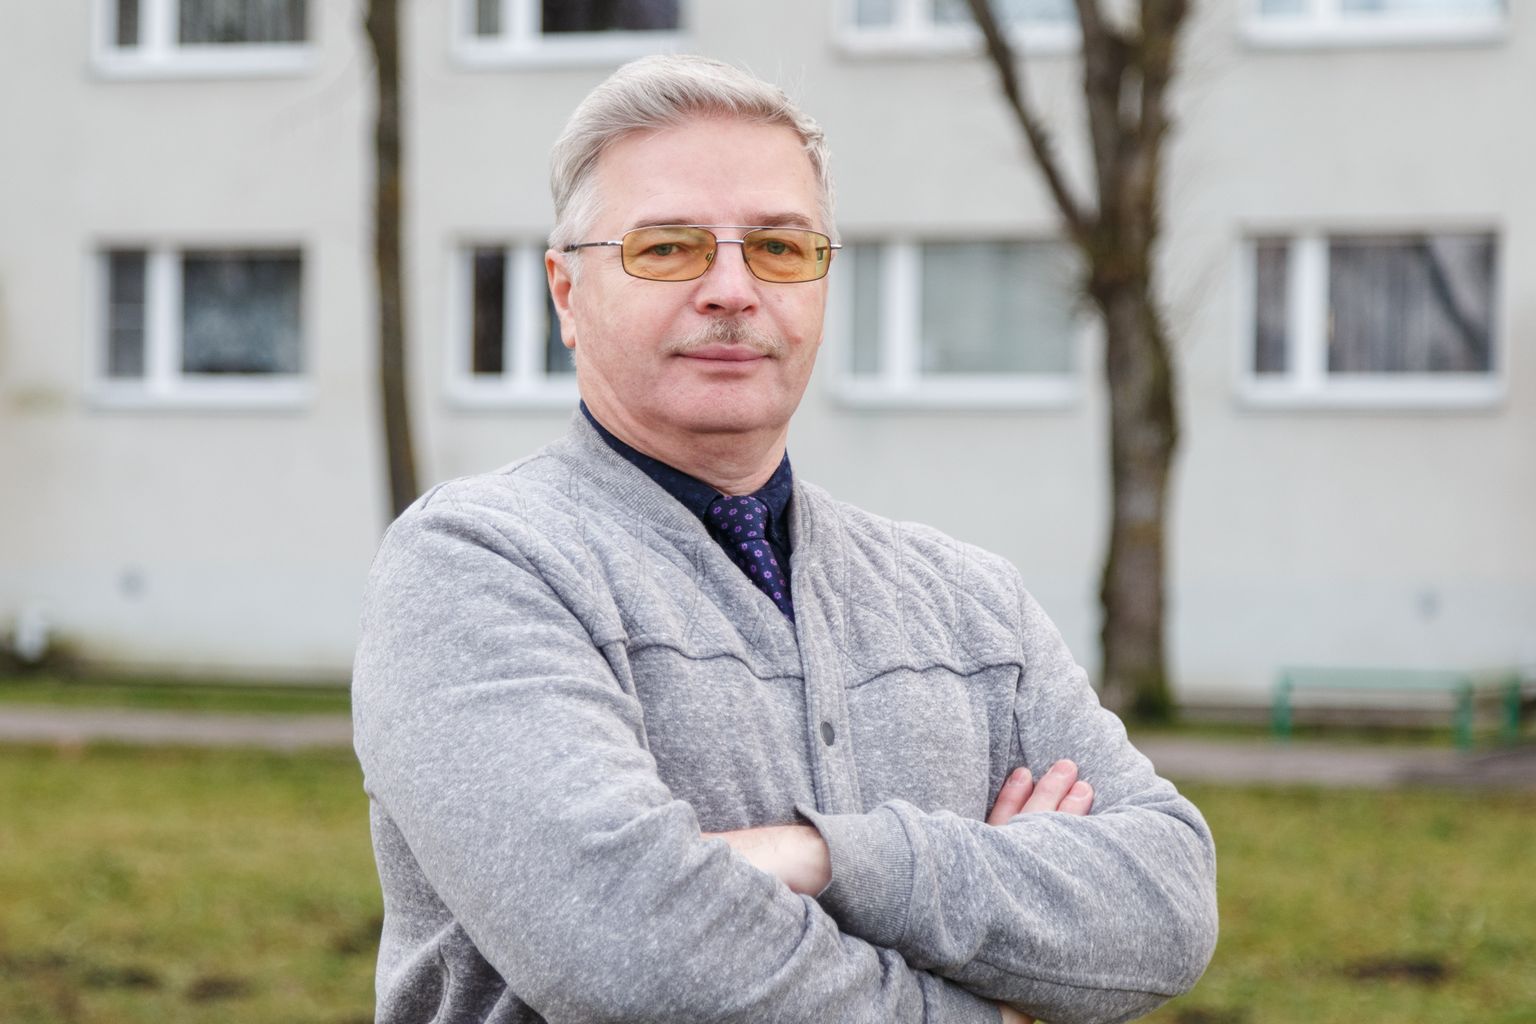 Andrey Kuzichkin, a political refugee living in Estonia, became a citizen of Estonia last week.